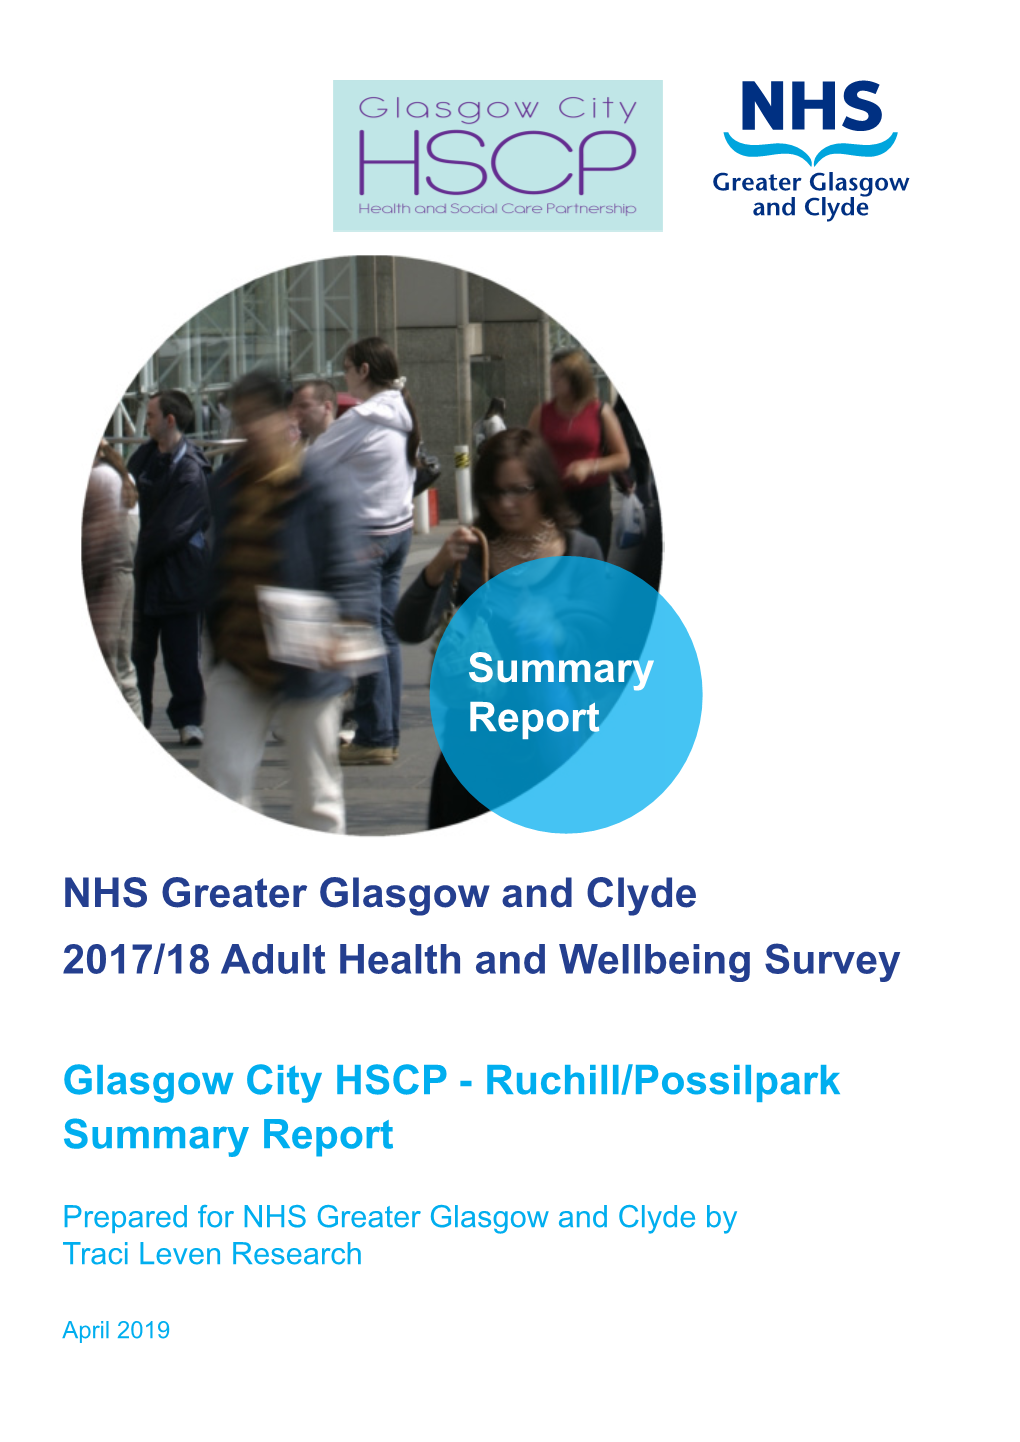 Glasgow City HSCP - Ruchill/Possilpark Summary Report